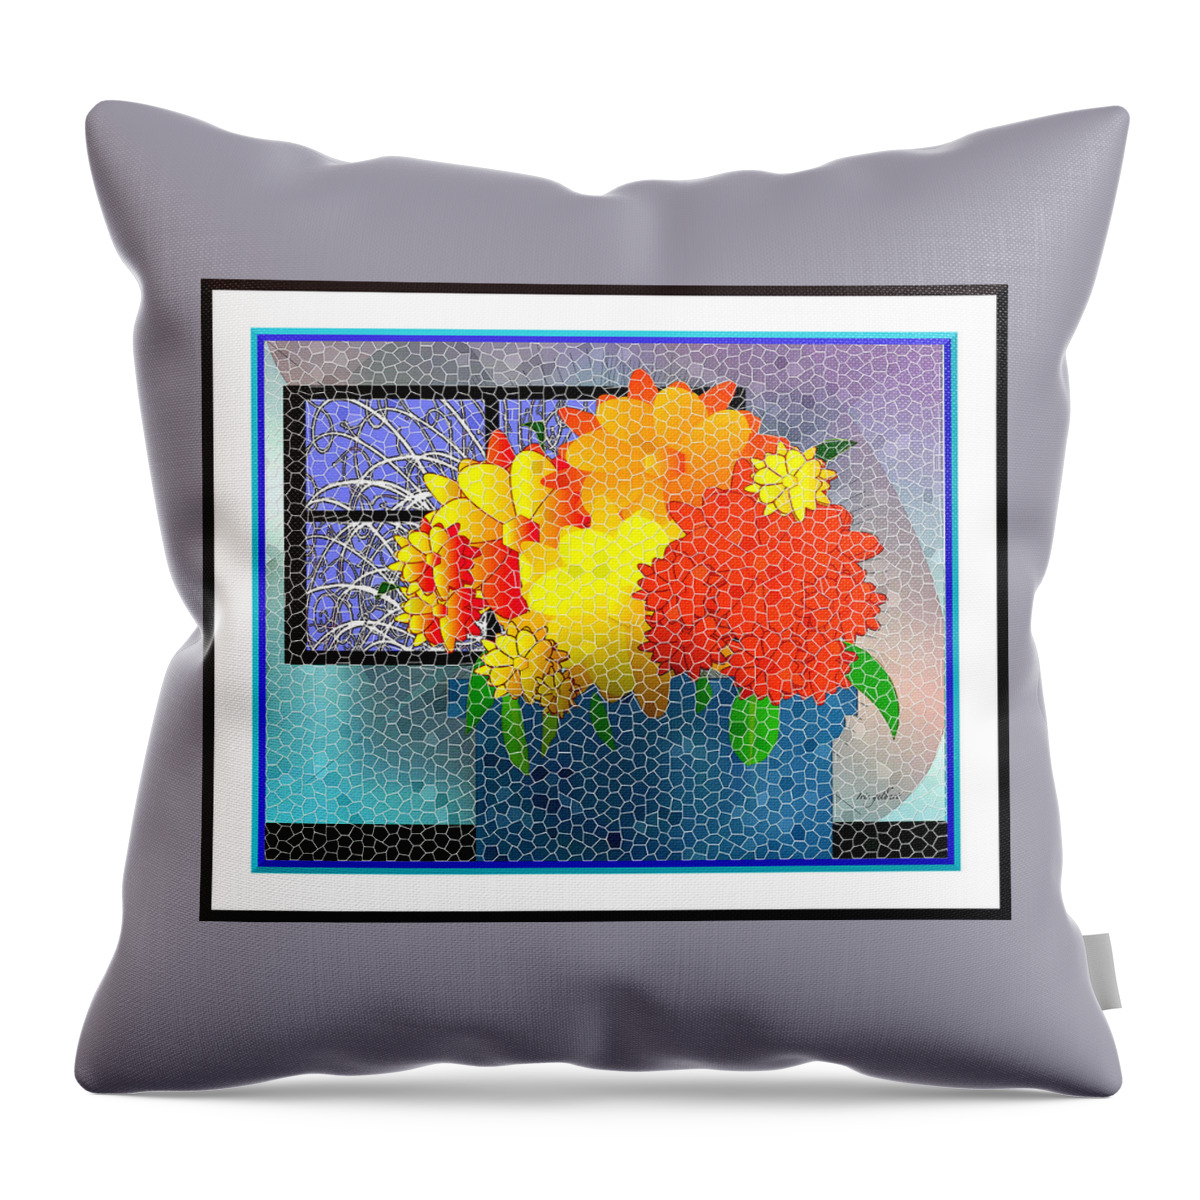 Floral Throw Pillow featuring the digital art Welcoming Mosaic by Iris Gelbart